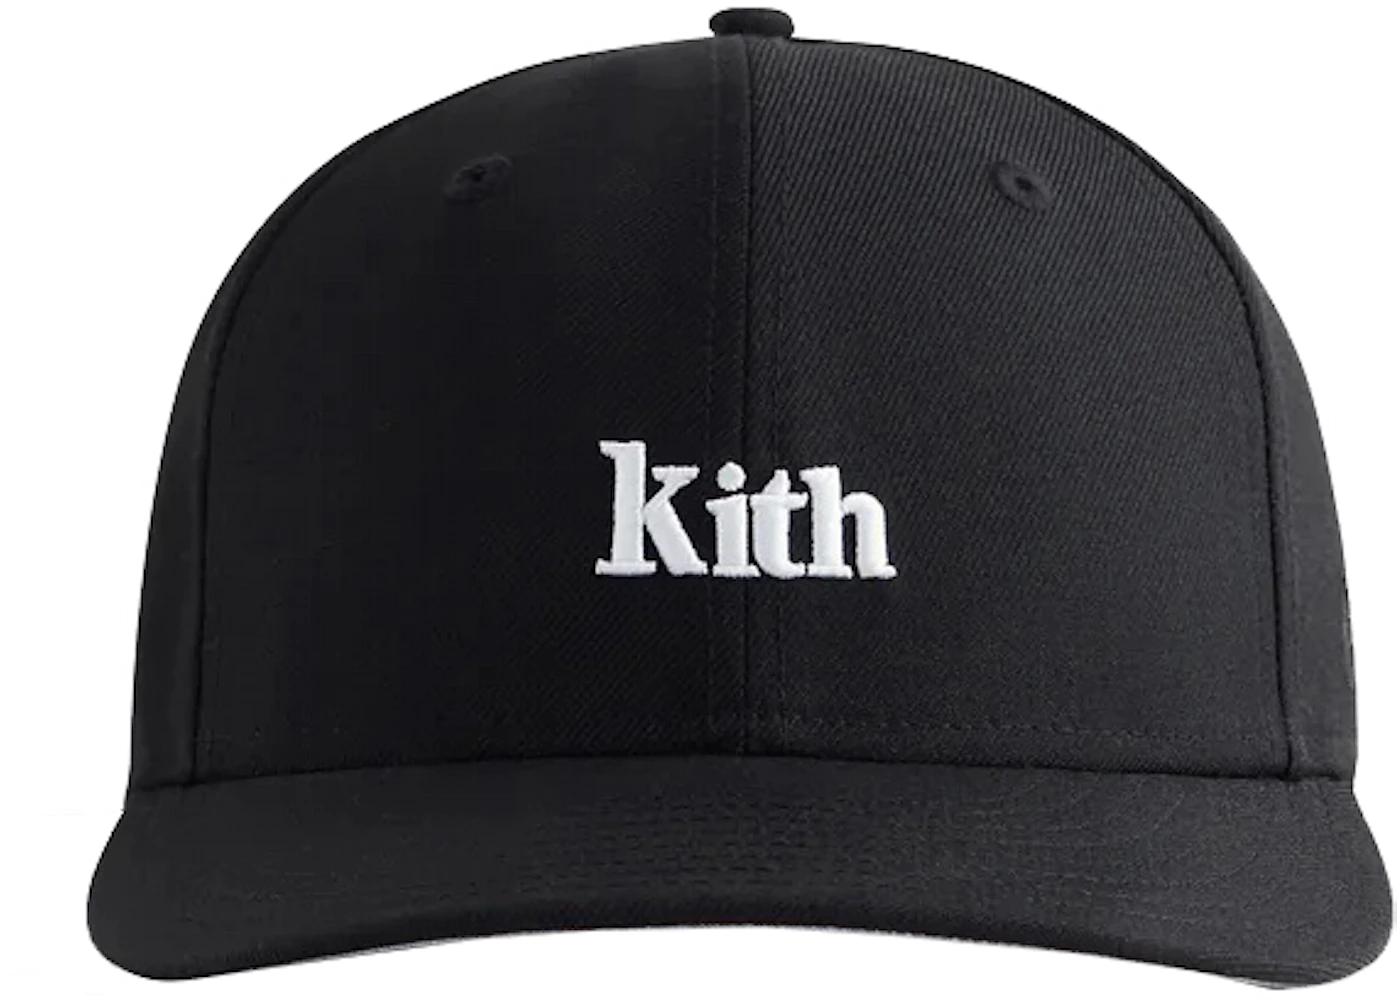 New Era Serif White Sox Cap Black by KITH